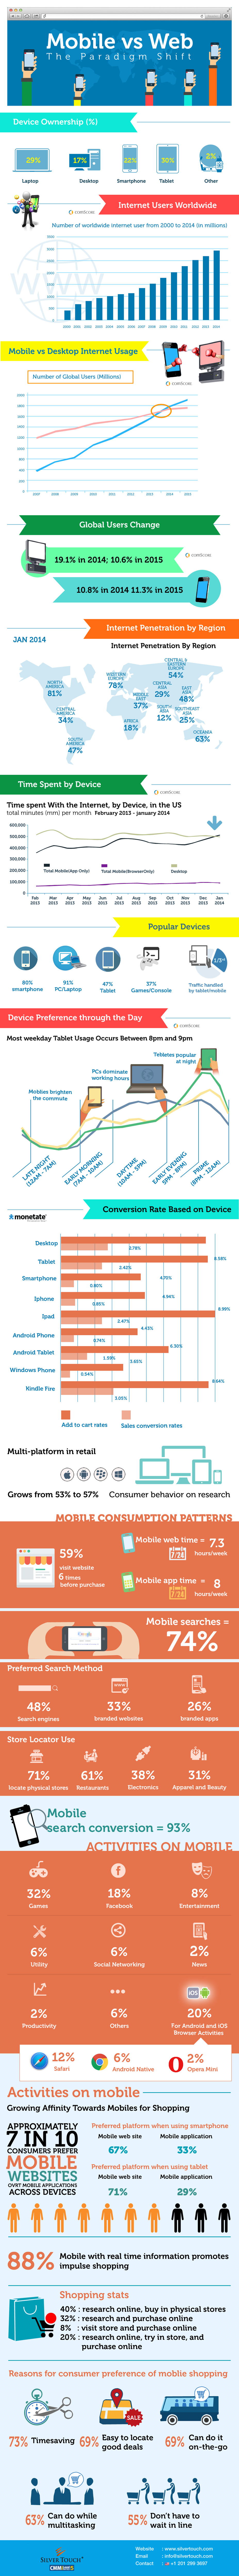 Mobile Vs Web Infographic